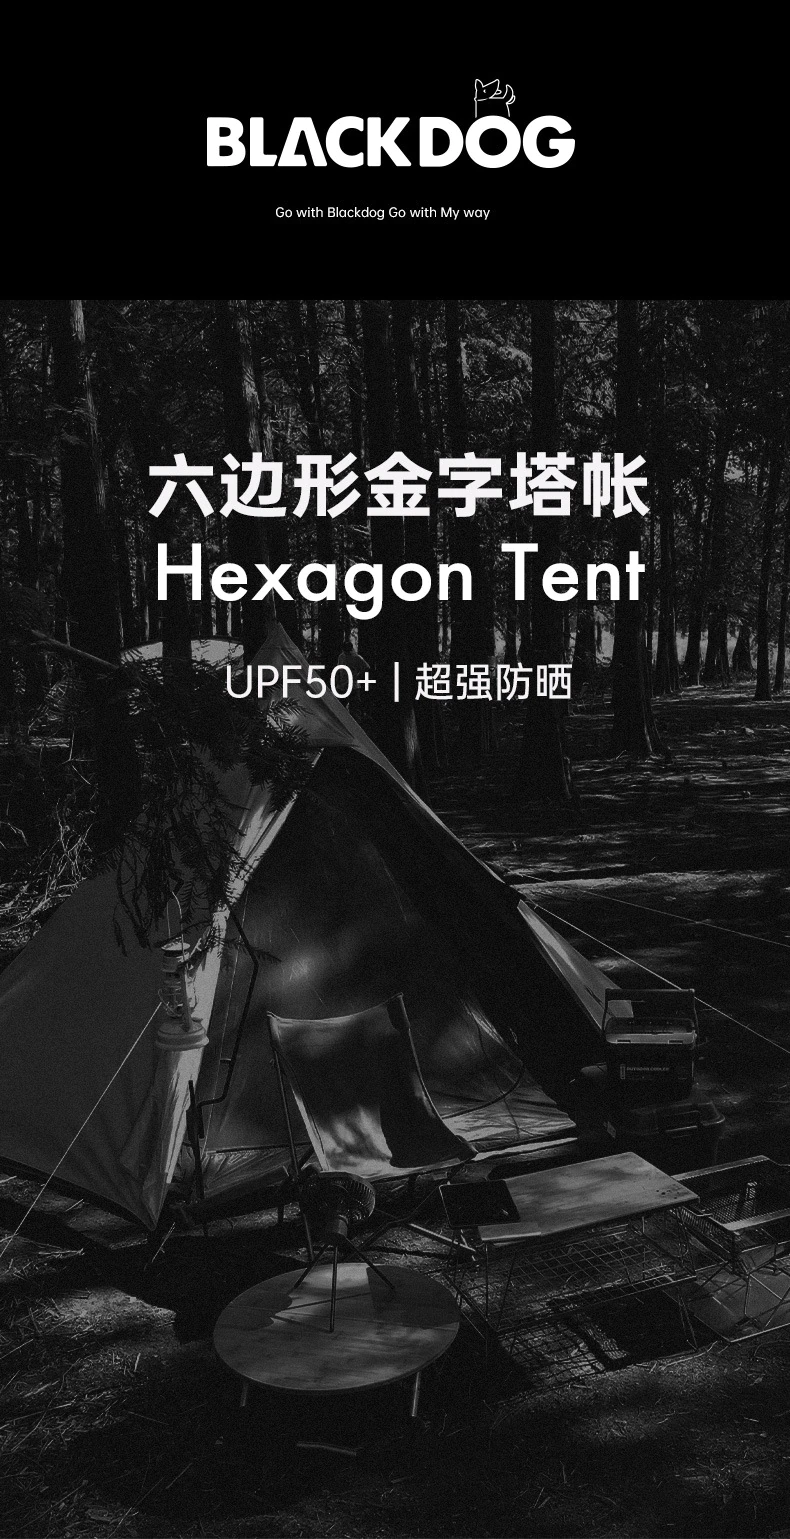 Cheap Goat Tents X Blackdog Hexagonal Pyramid Tent Outdoor Camping 3